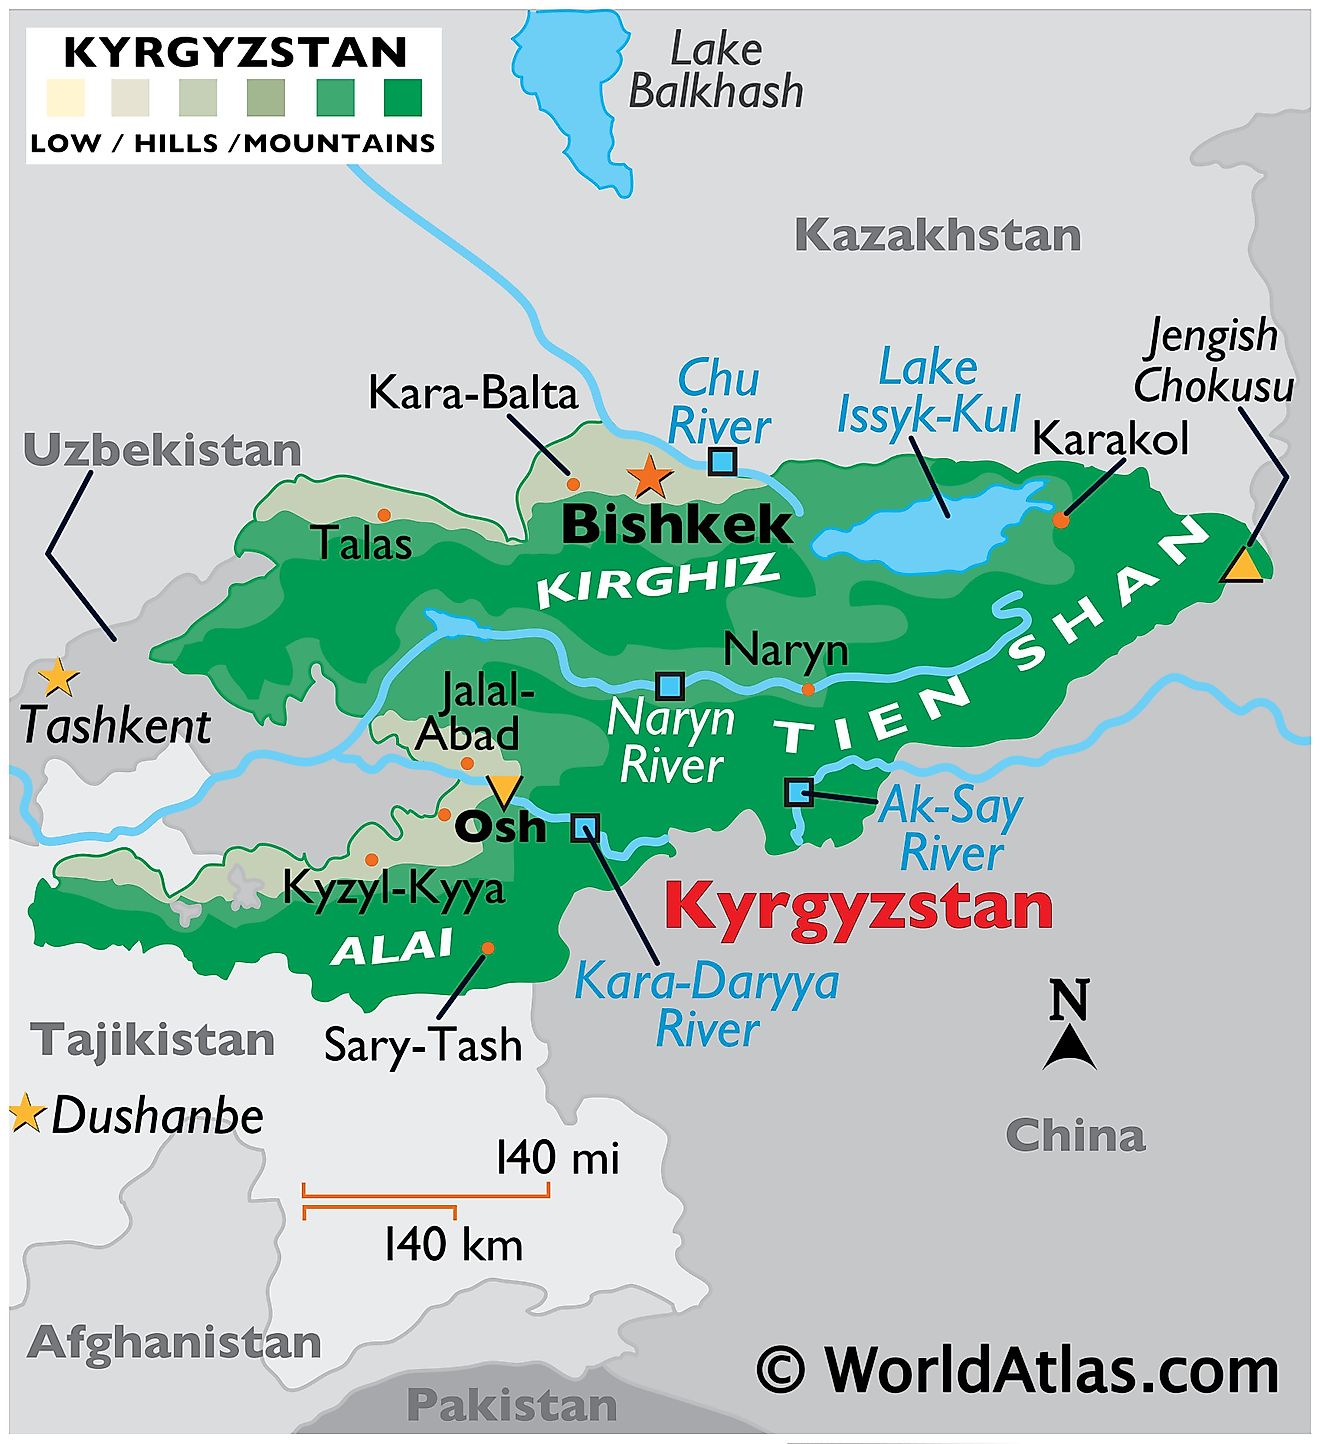 kyrgyzstan presentation in english